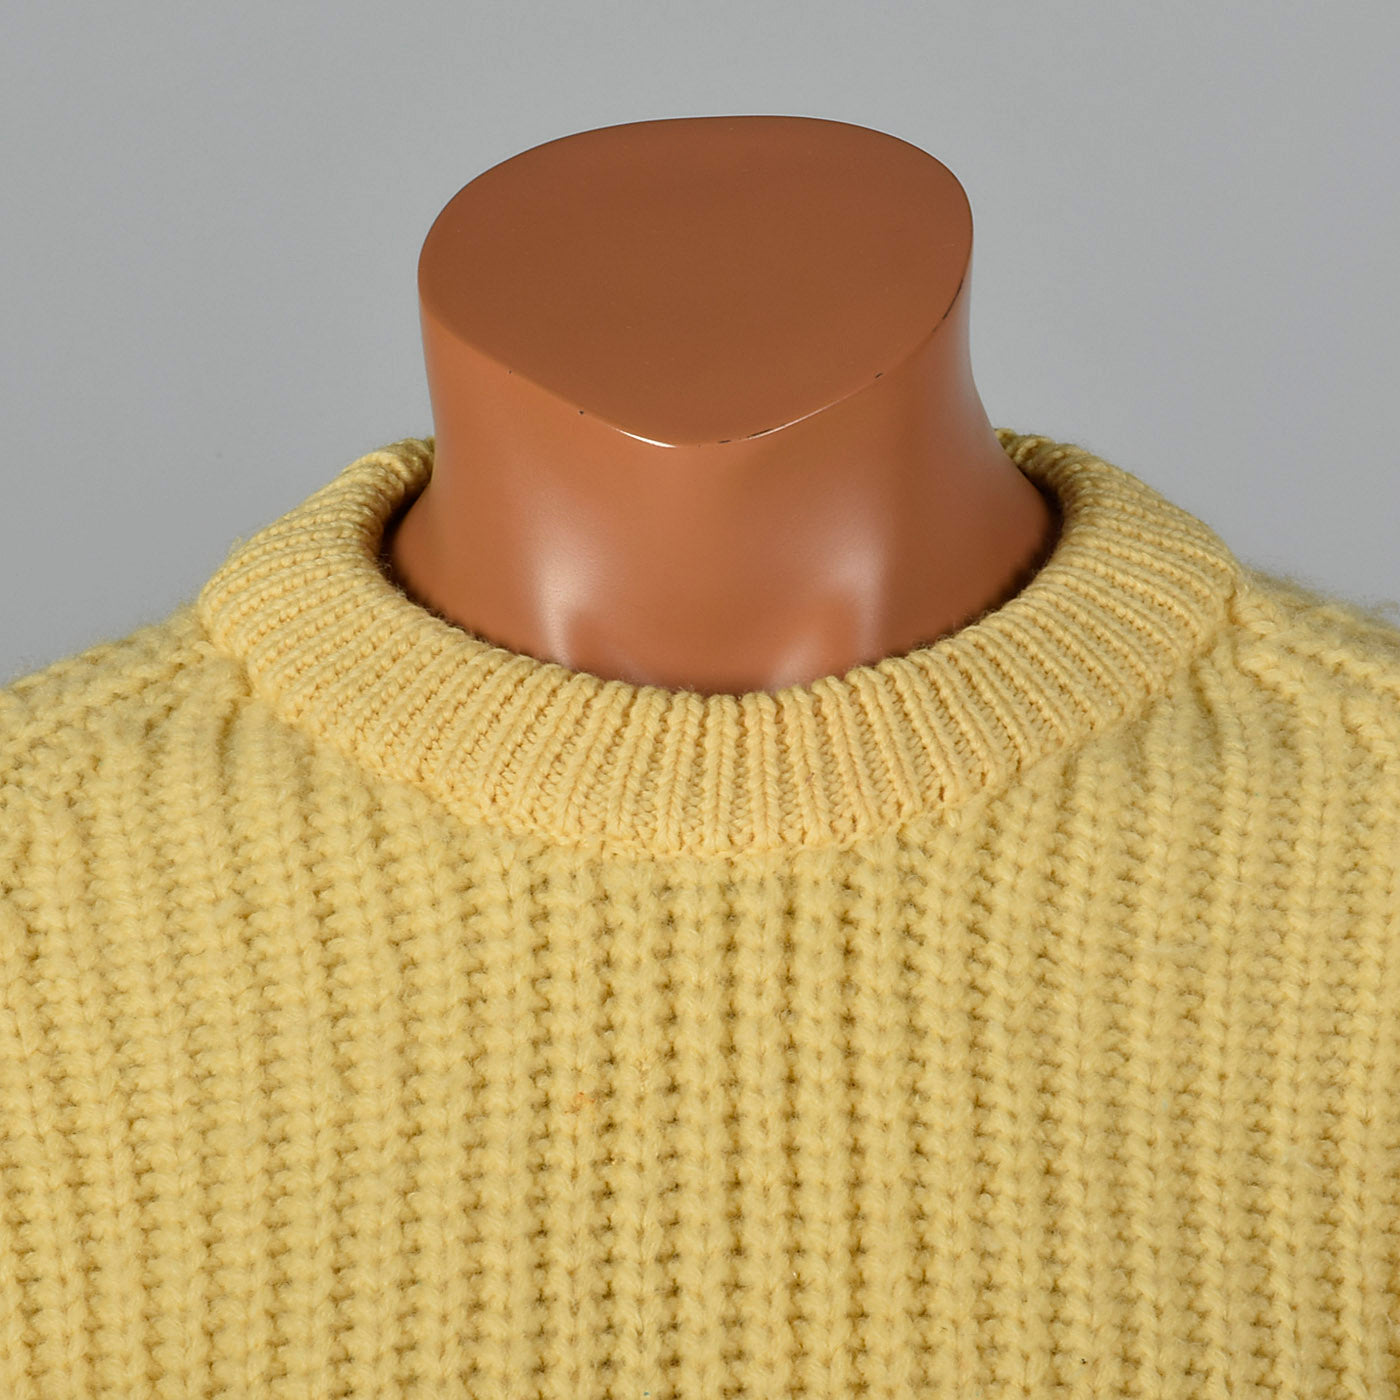 1960s Mens Yellow Chunky Knit Wool Sweater